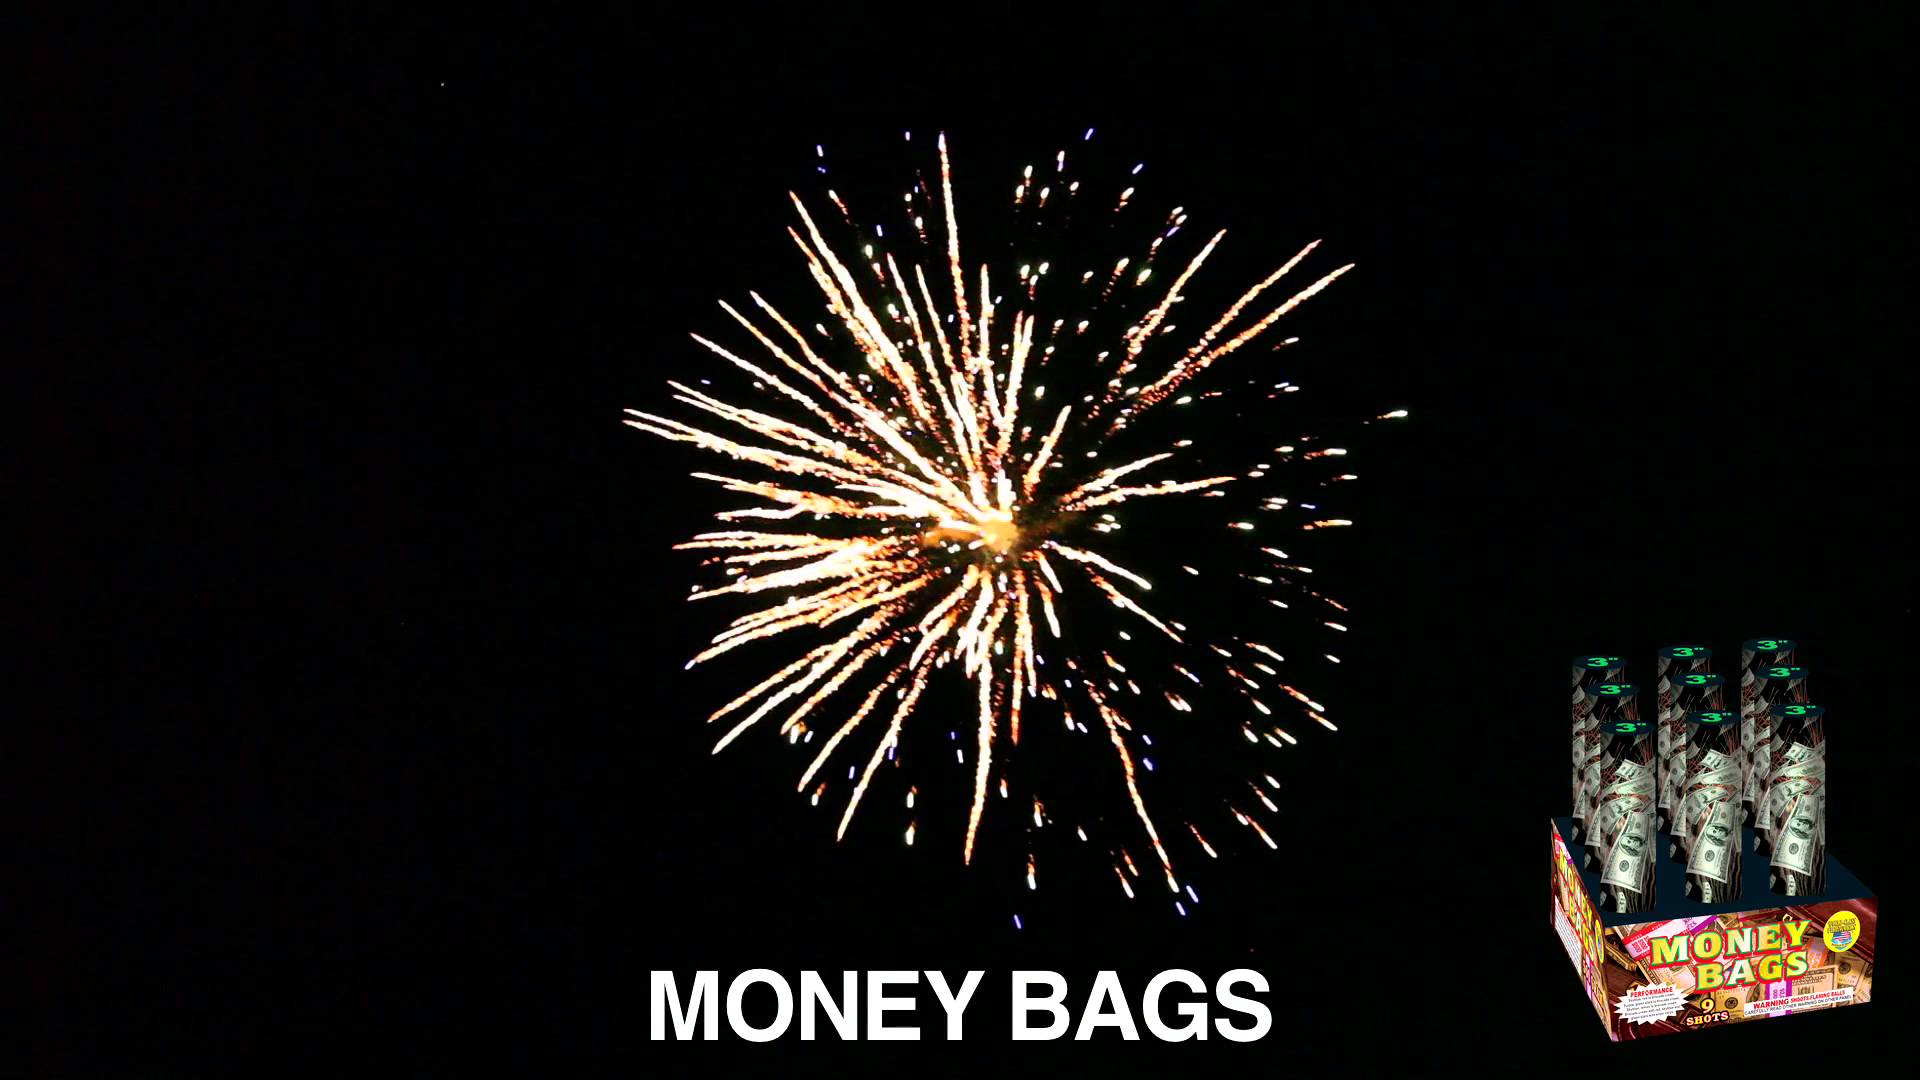 MONEY BAG - 3 INCH CAKE - WORLD CLASS FIREWORKS - YouTube